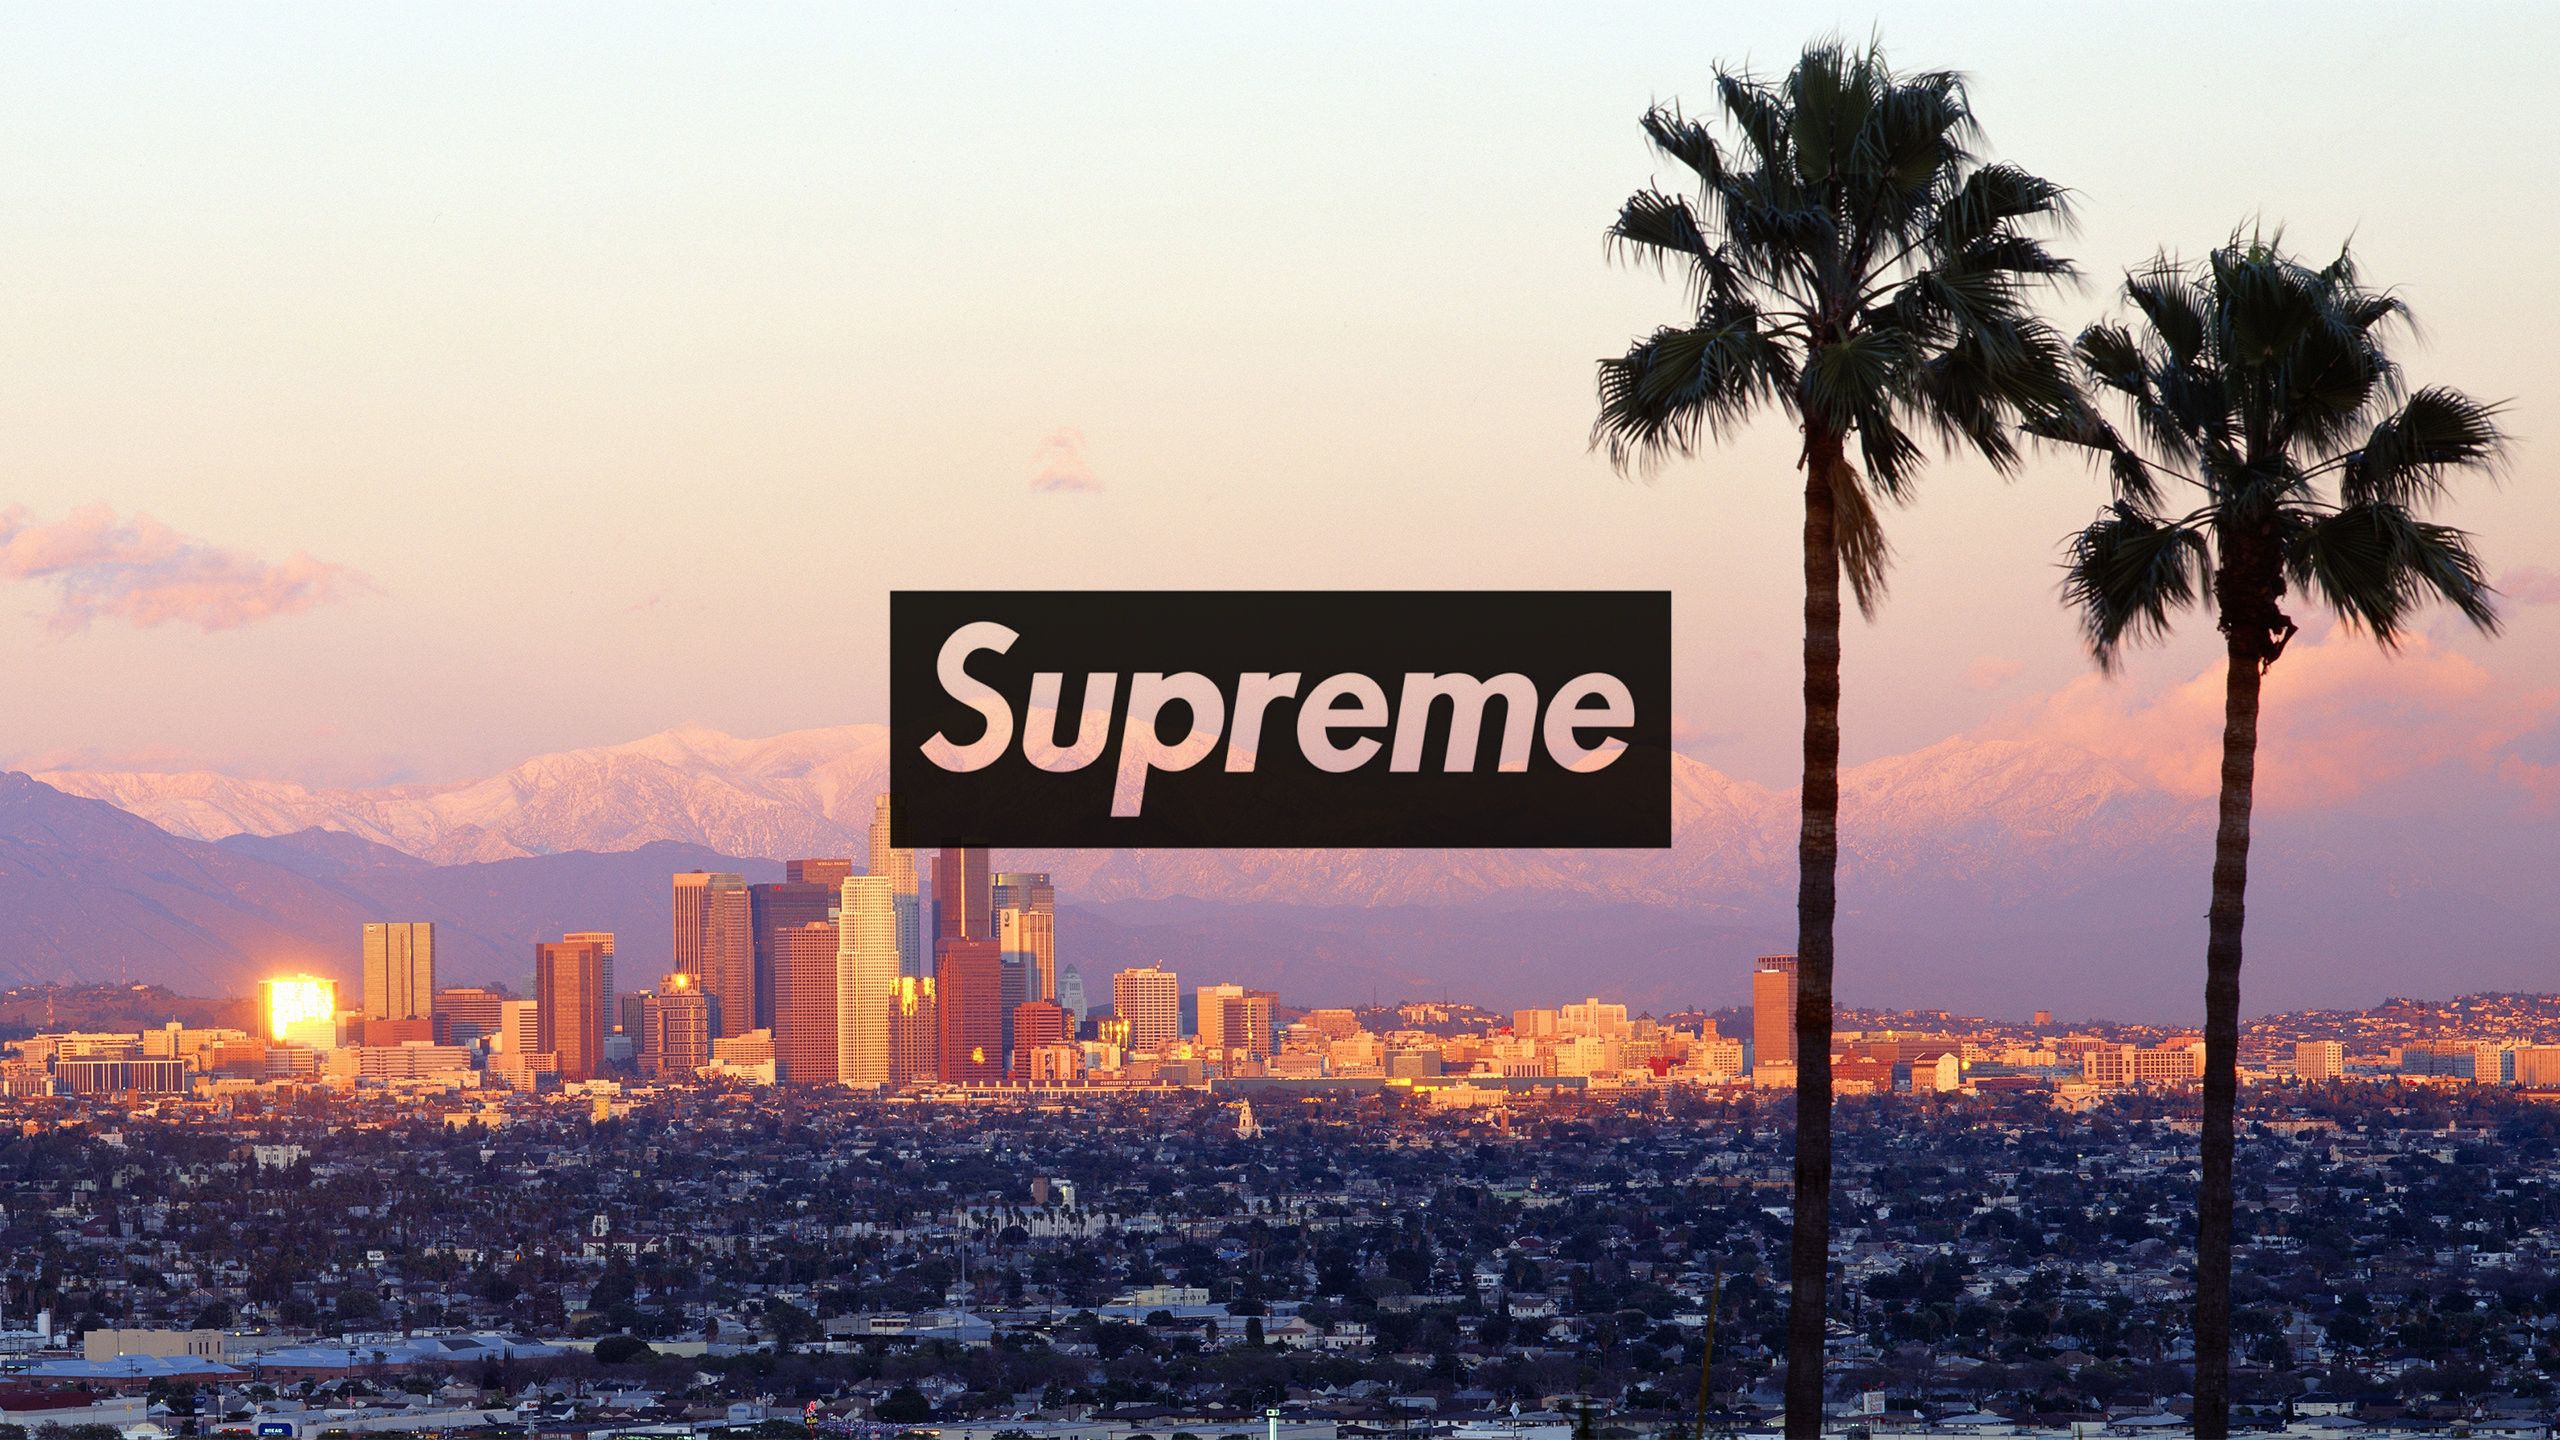 The Los Angeles Supreme Wallpaper